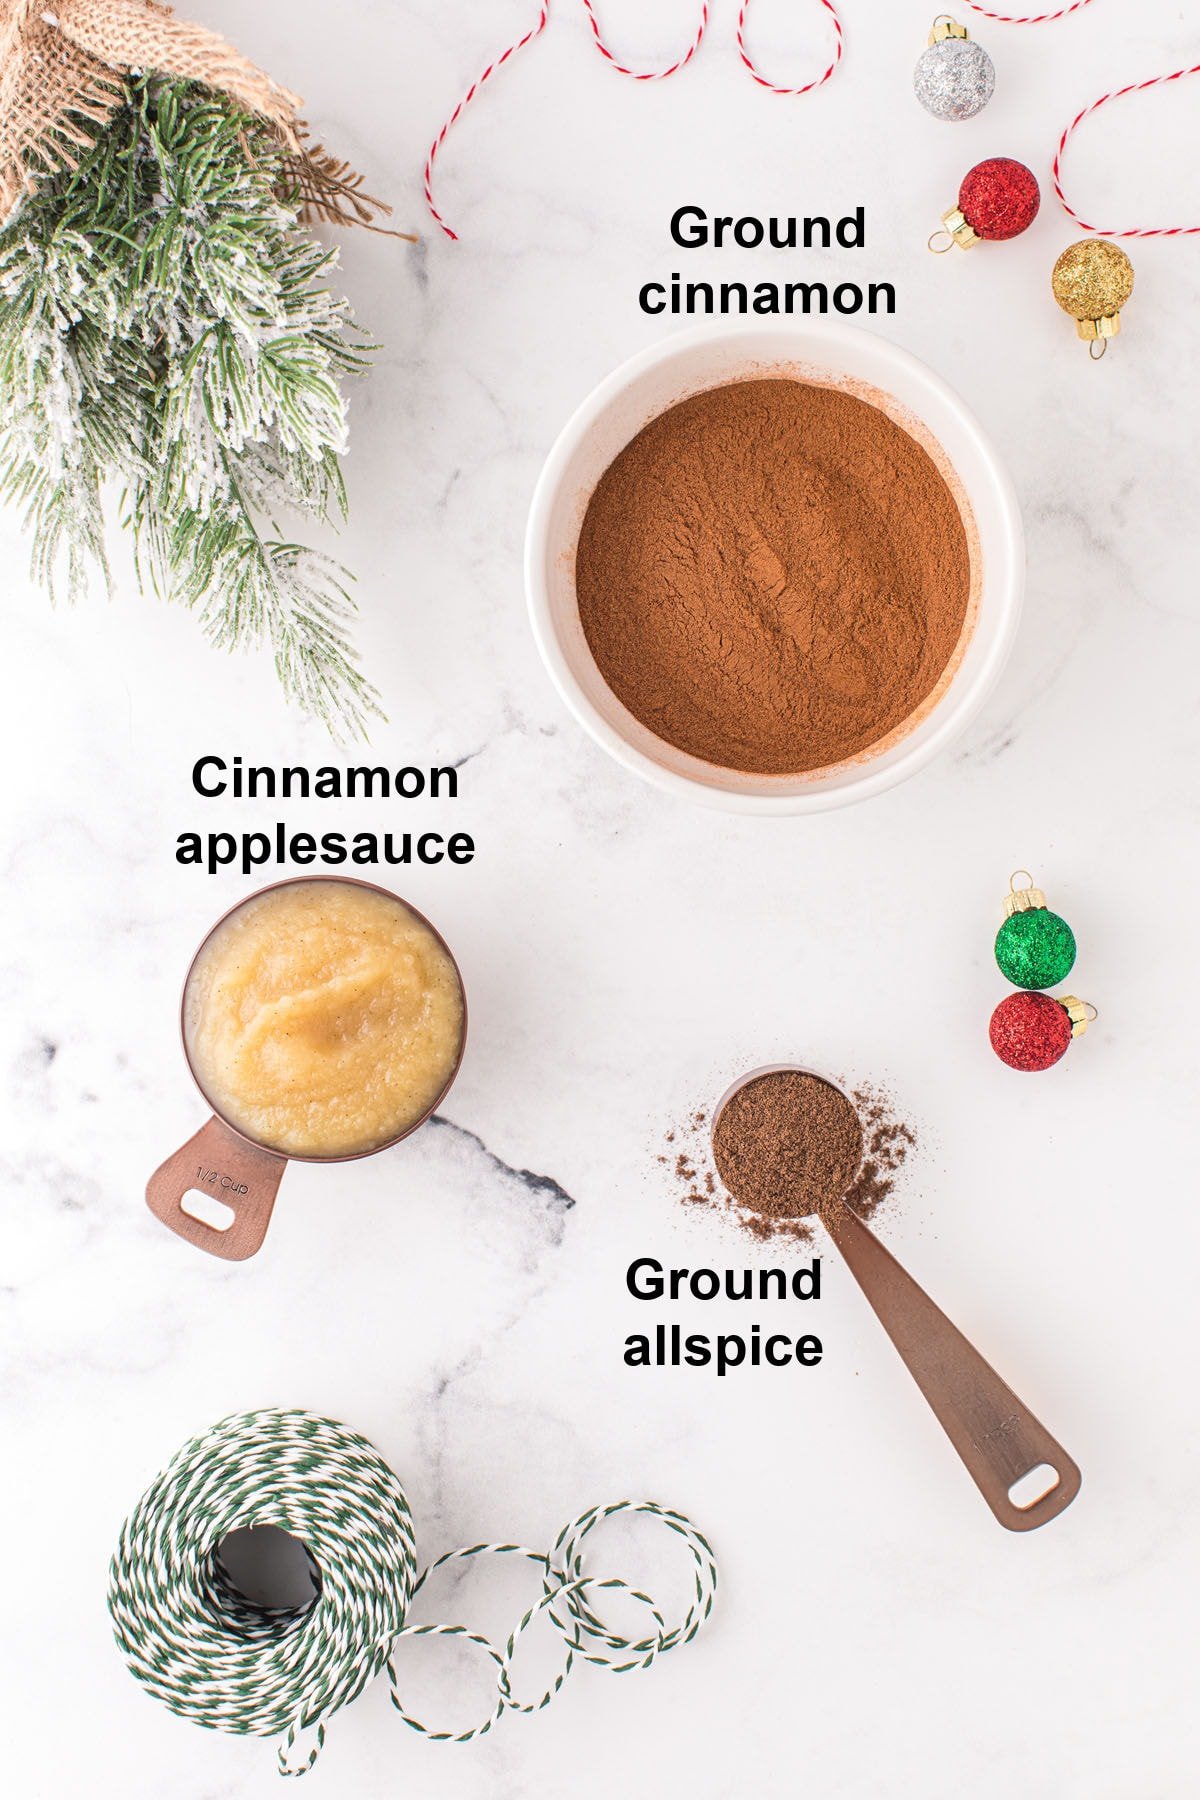 cinnamon ornaments ingredients including ground cinnamon, cinnamon applesauce and ground allspice.